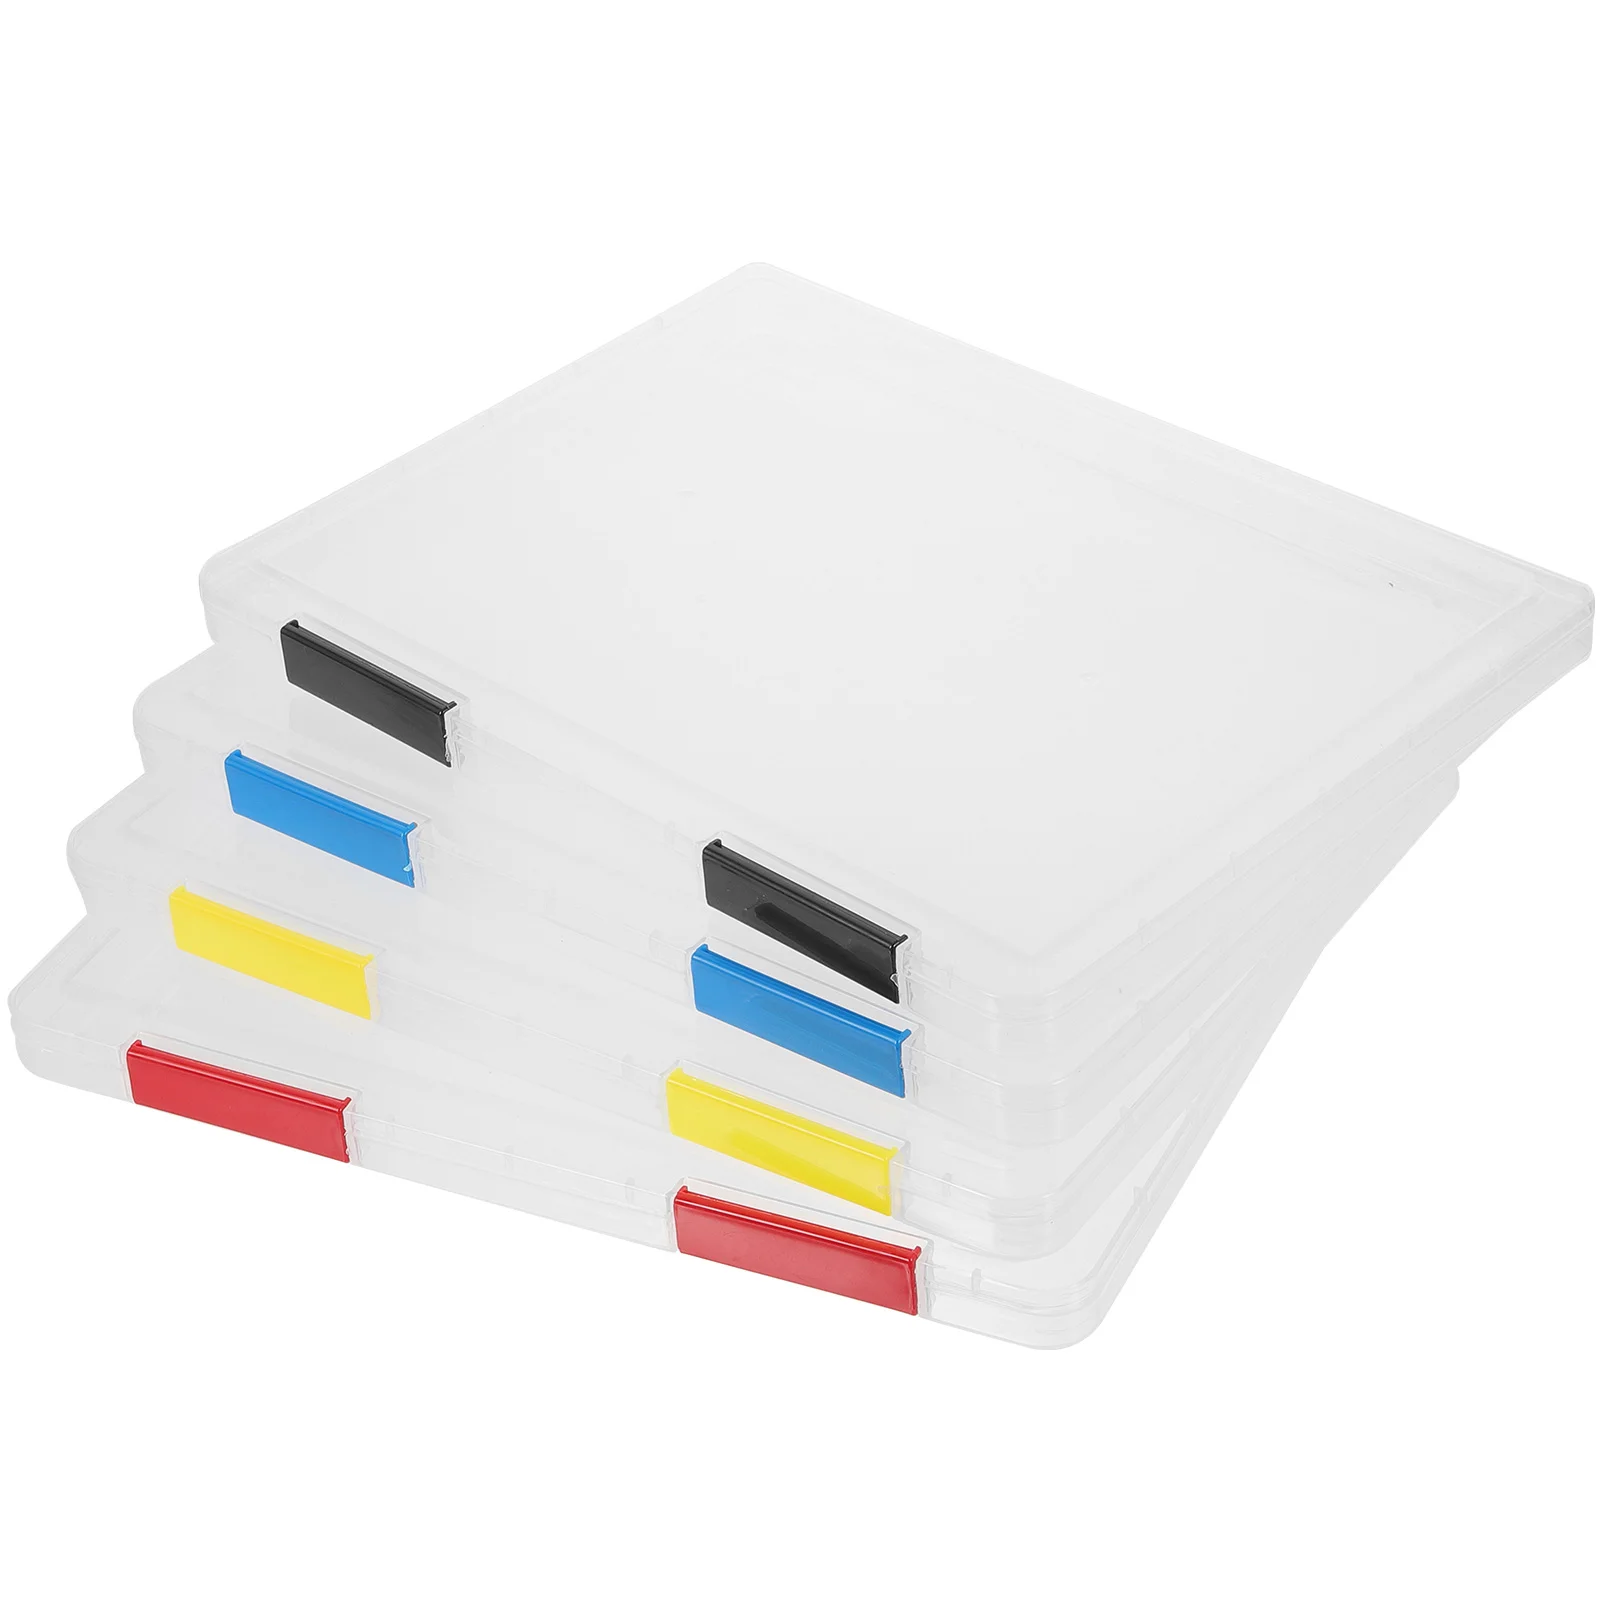 

4 Pcs Office Books Storage Document Holder Scrapbook Portable Project Case File Plastic Magazines Paper Protector Folders